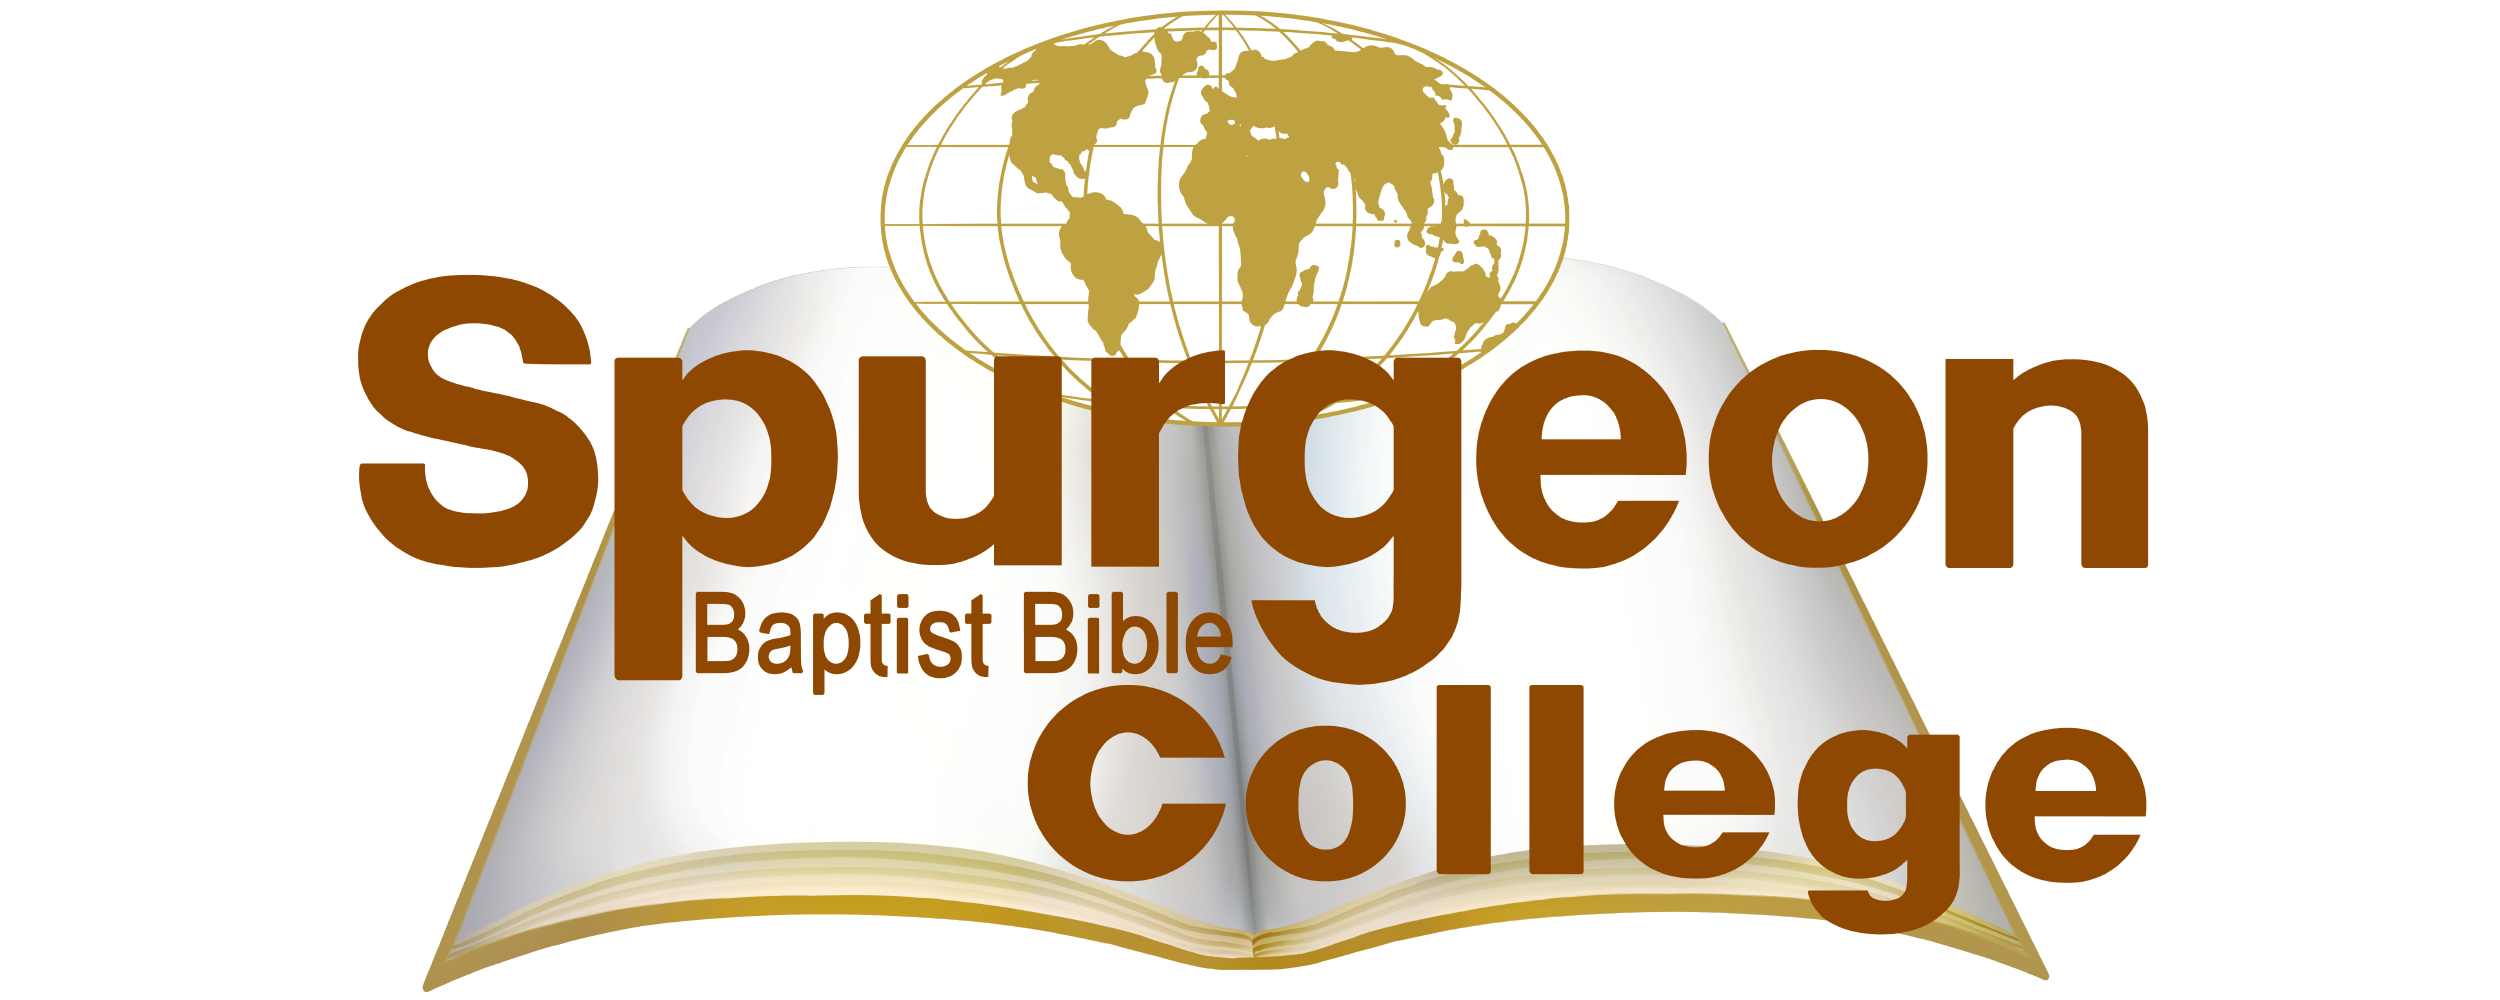 Spurgeon Baptist Bible College